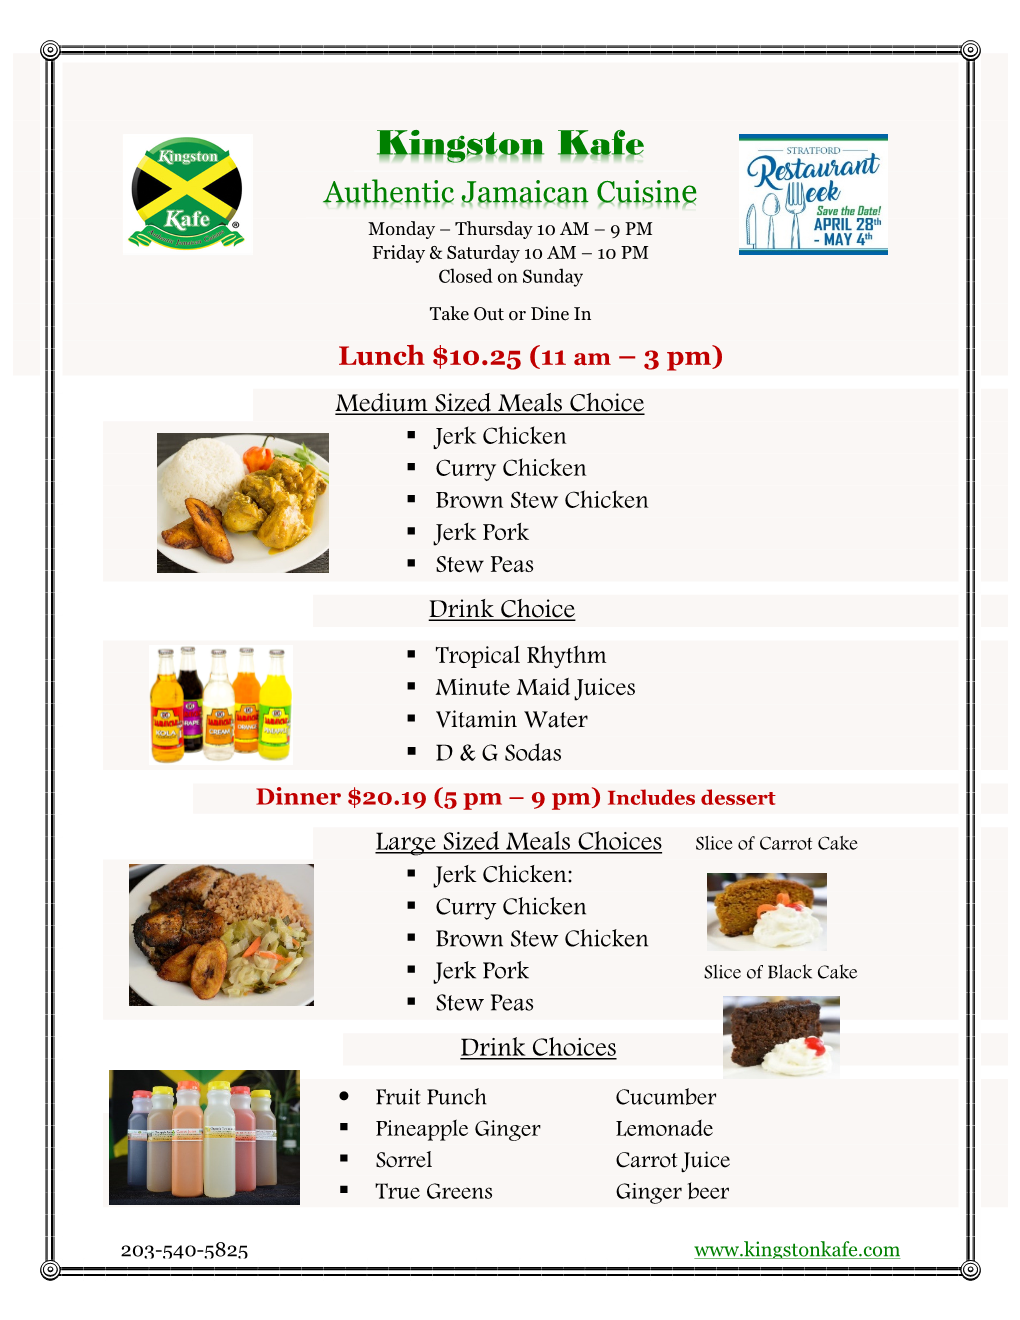 Kingston Kafe Authentic Jamaican Cuisin E Monday – Thursday 10 AM – 9 PM Friday & Saturday 10 AM – 10 PM Closed on Sunday